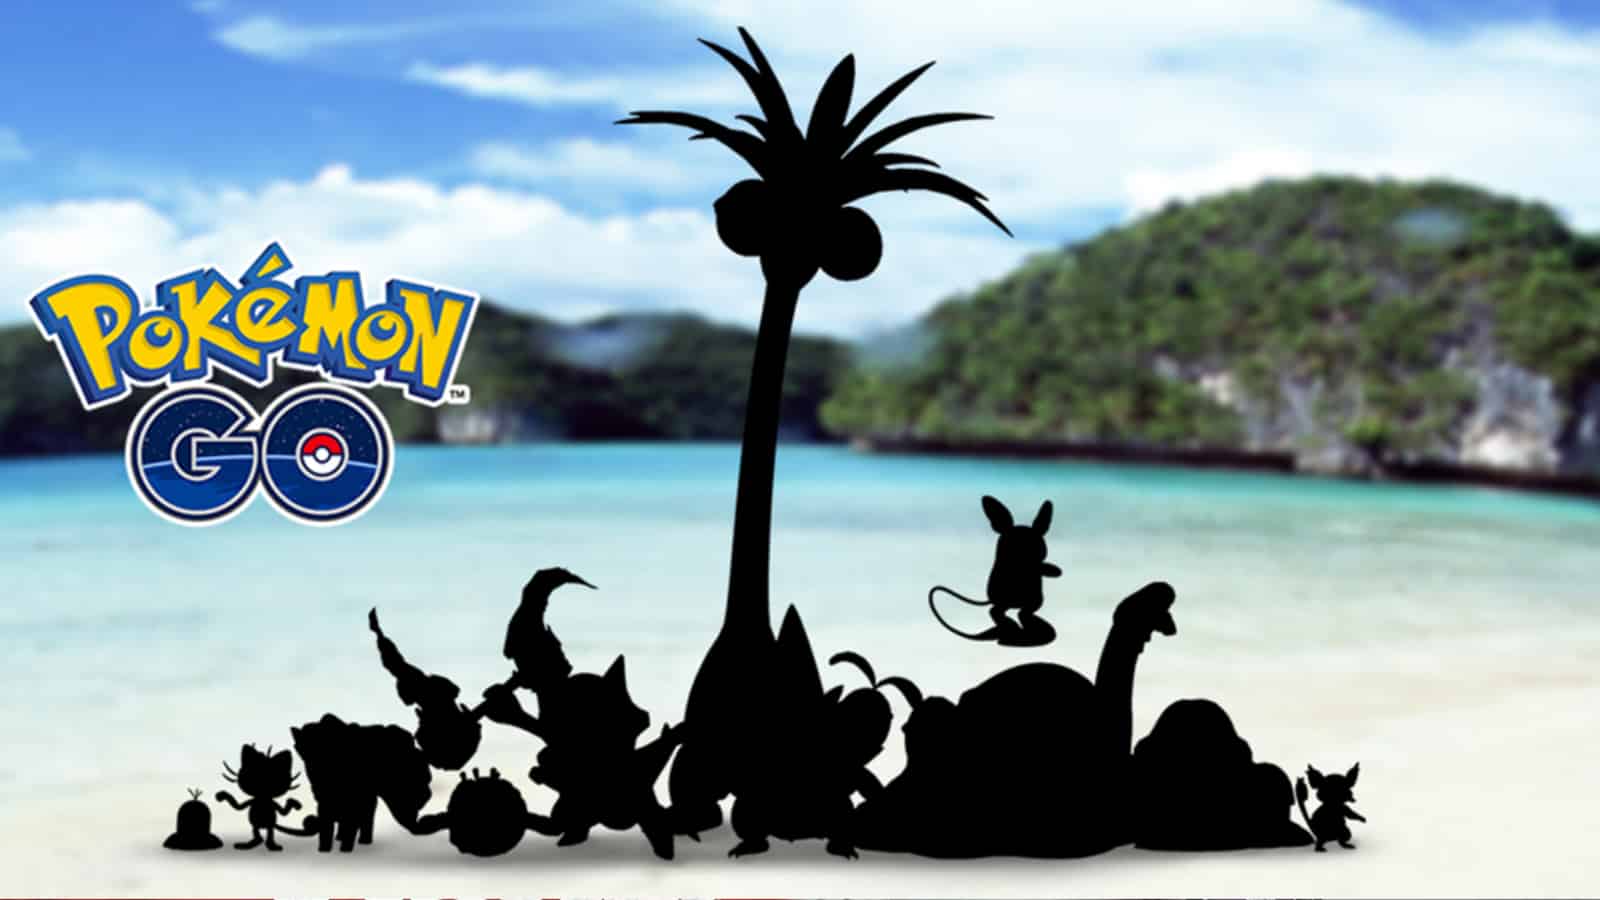 Pokemon Go Alola Silhouette promotional screenshot.